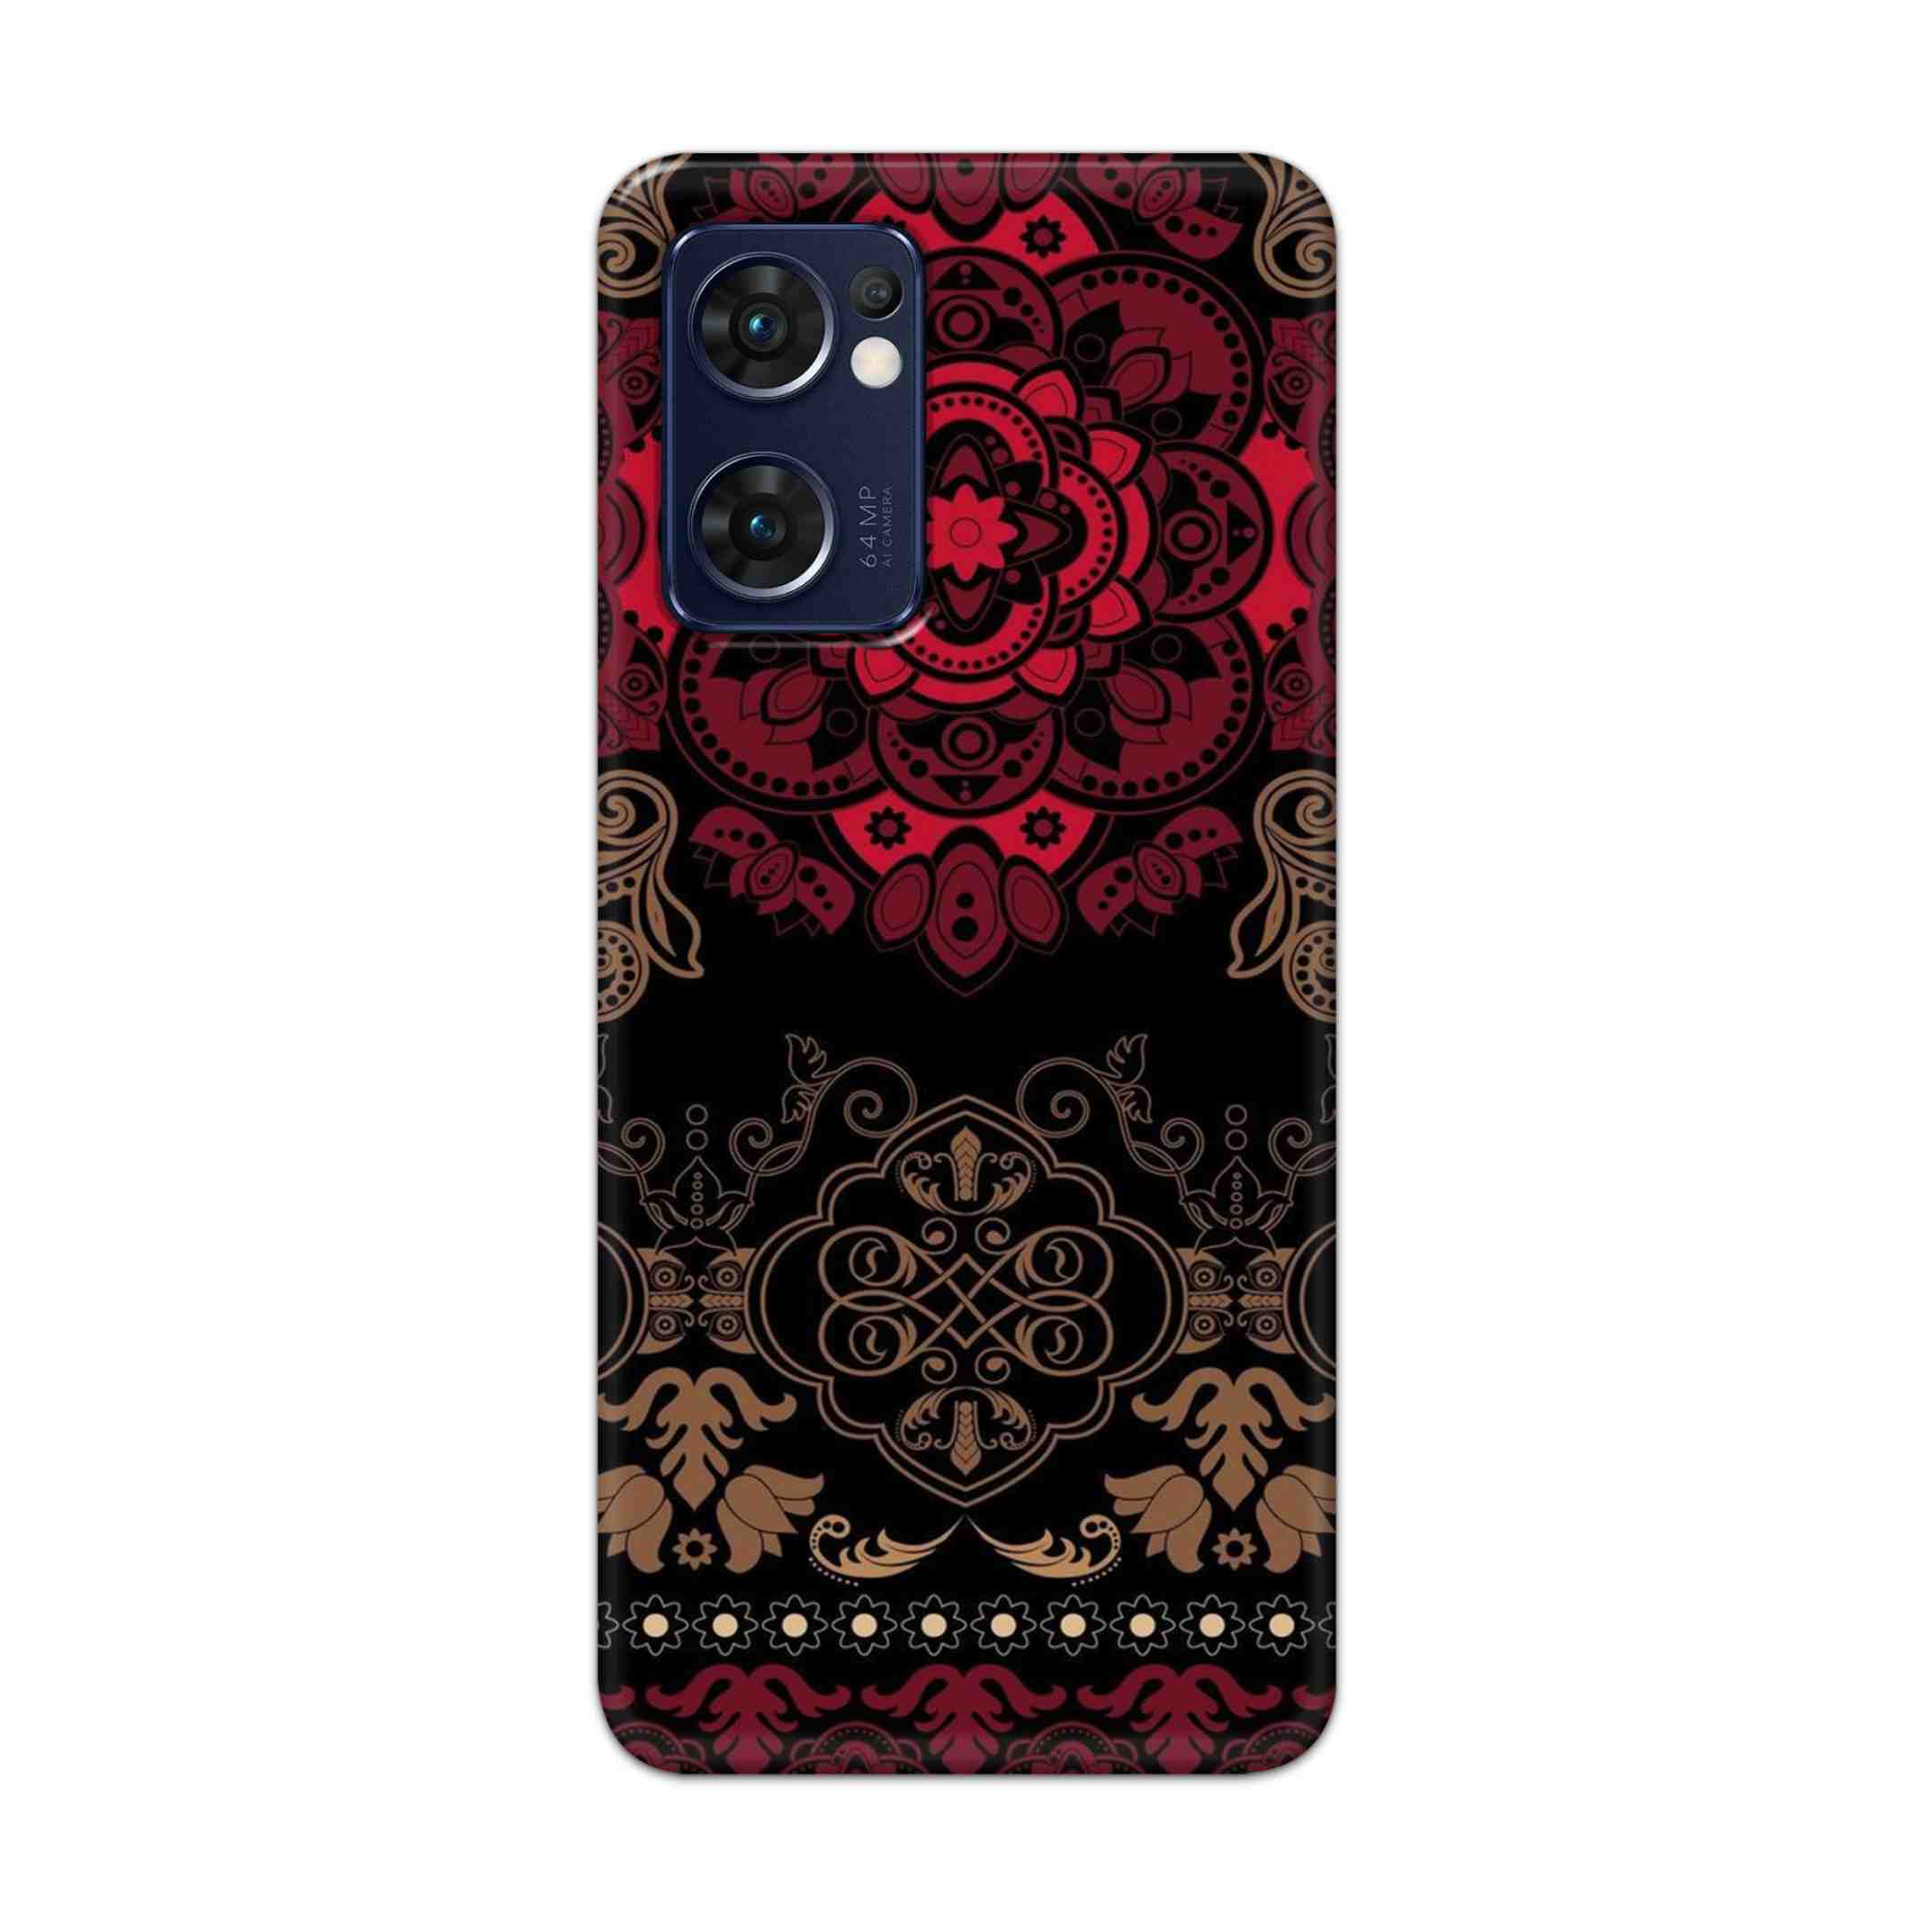 Buy Christian Mandalas Hard Back Mobile Phone Case Cover For Reno 7 5G Online